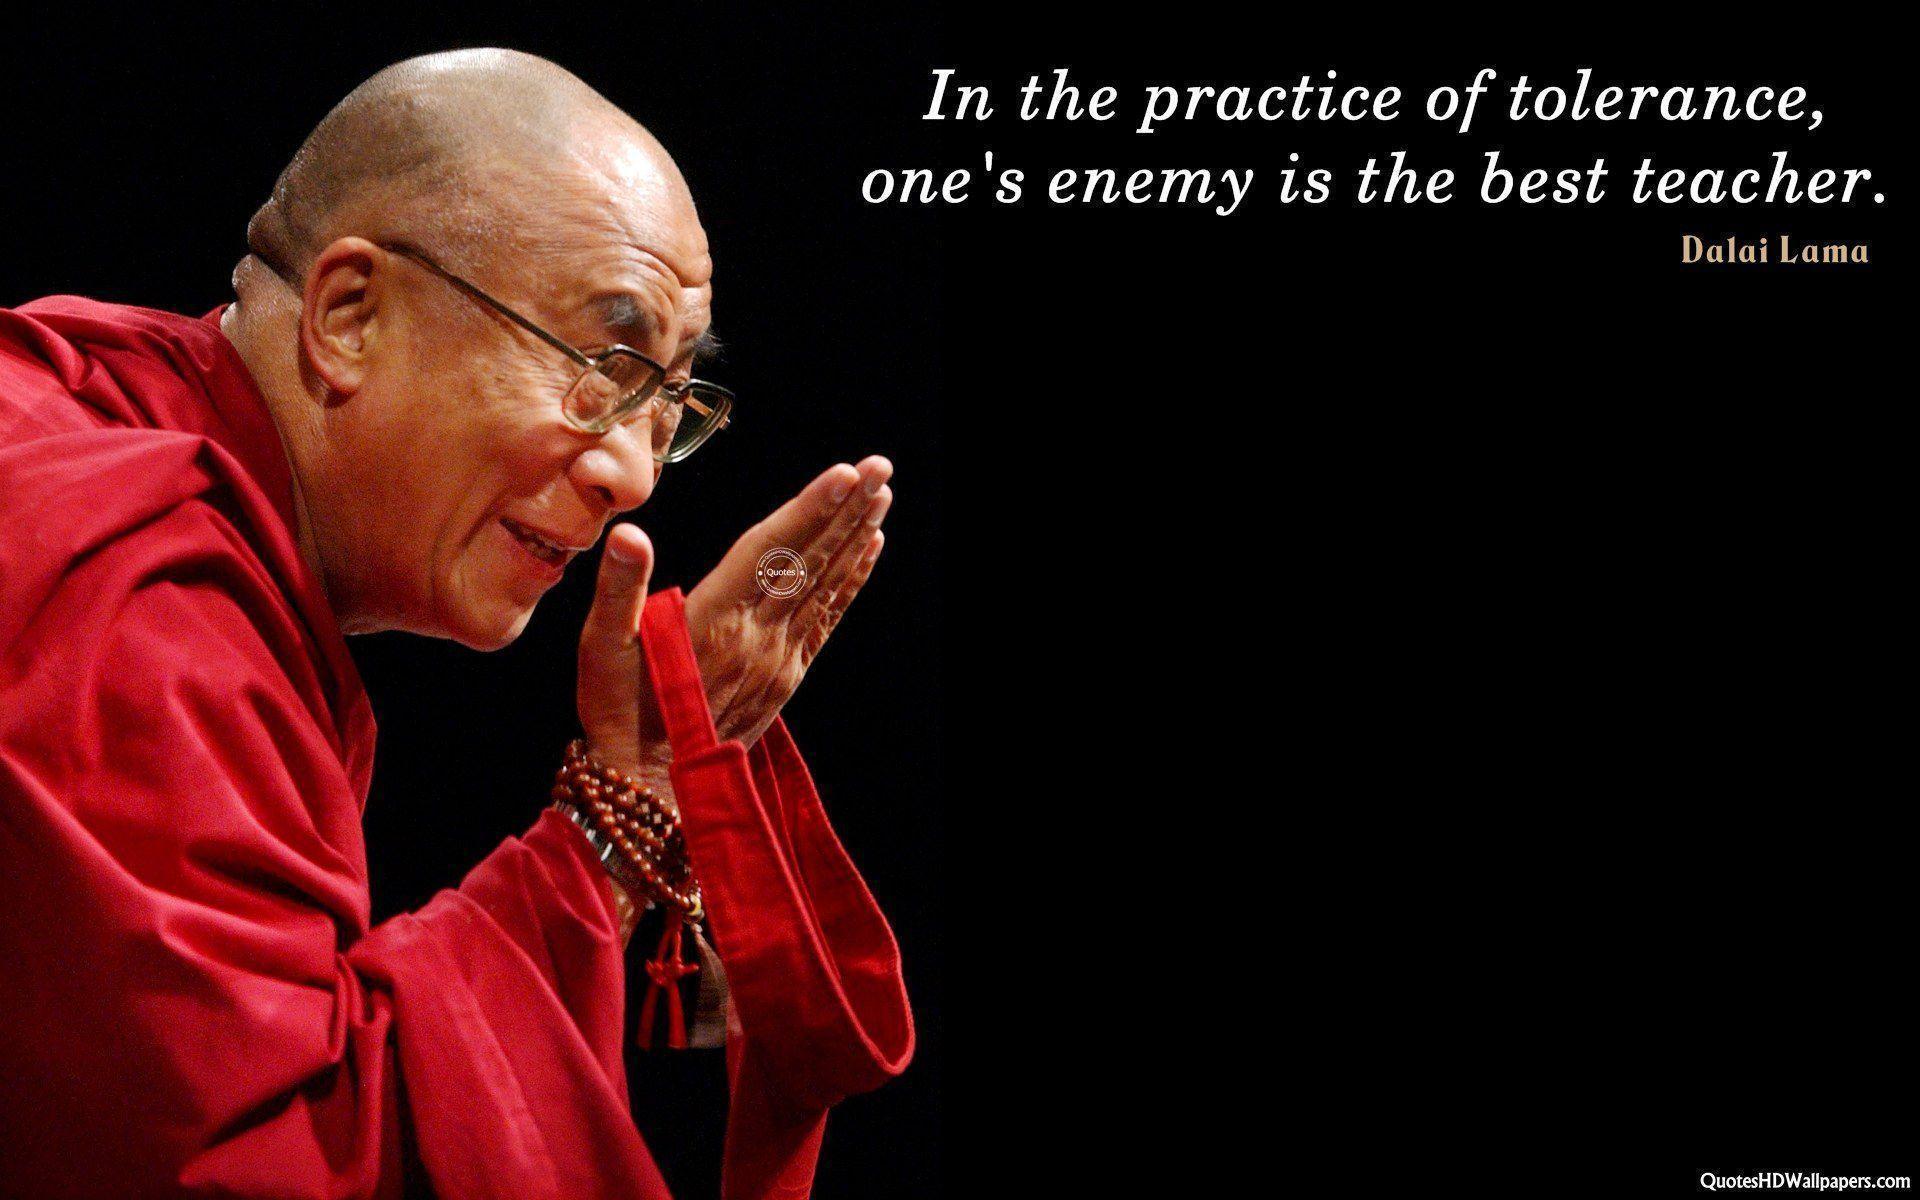 Dalai Lama Quotes Image. HD Wallpaper Image